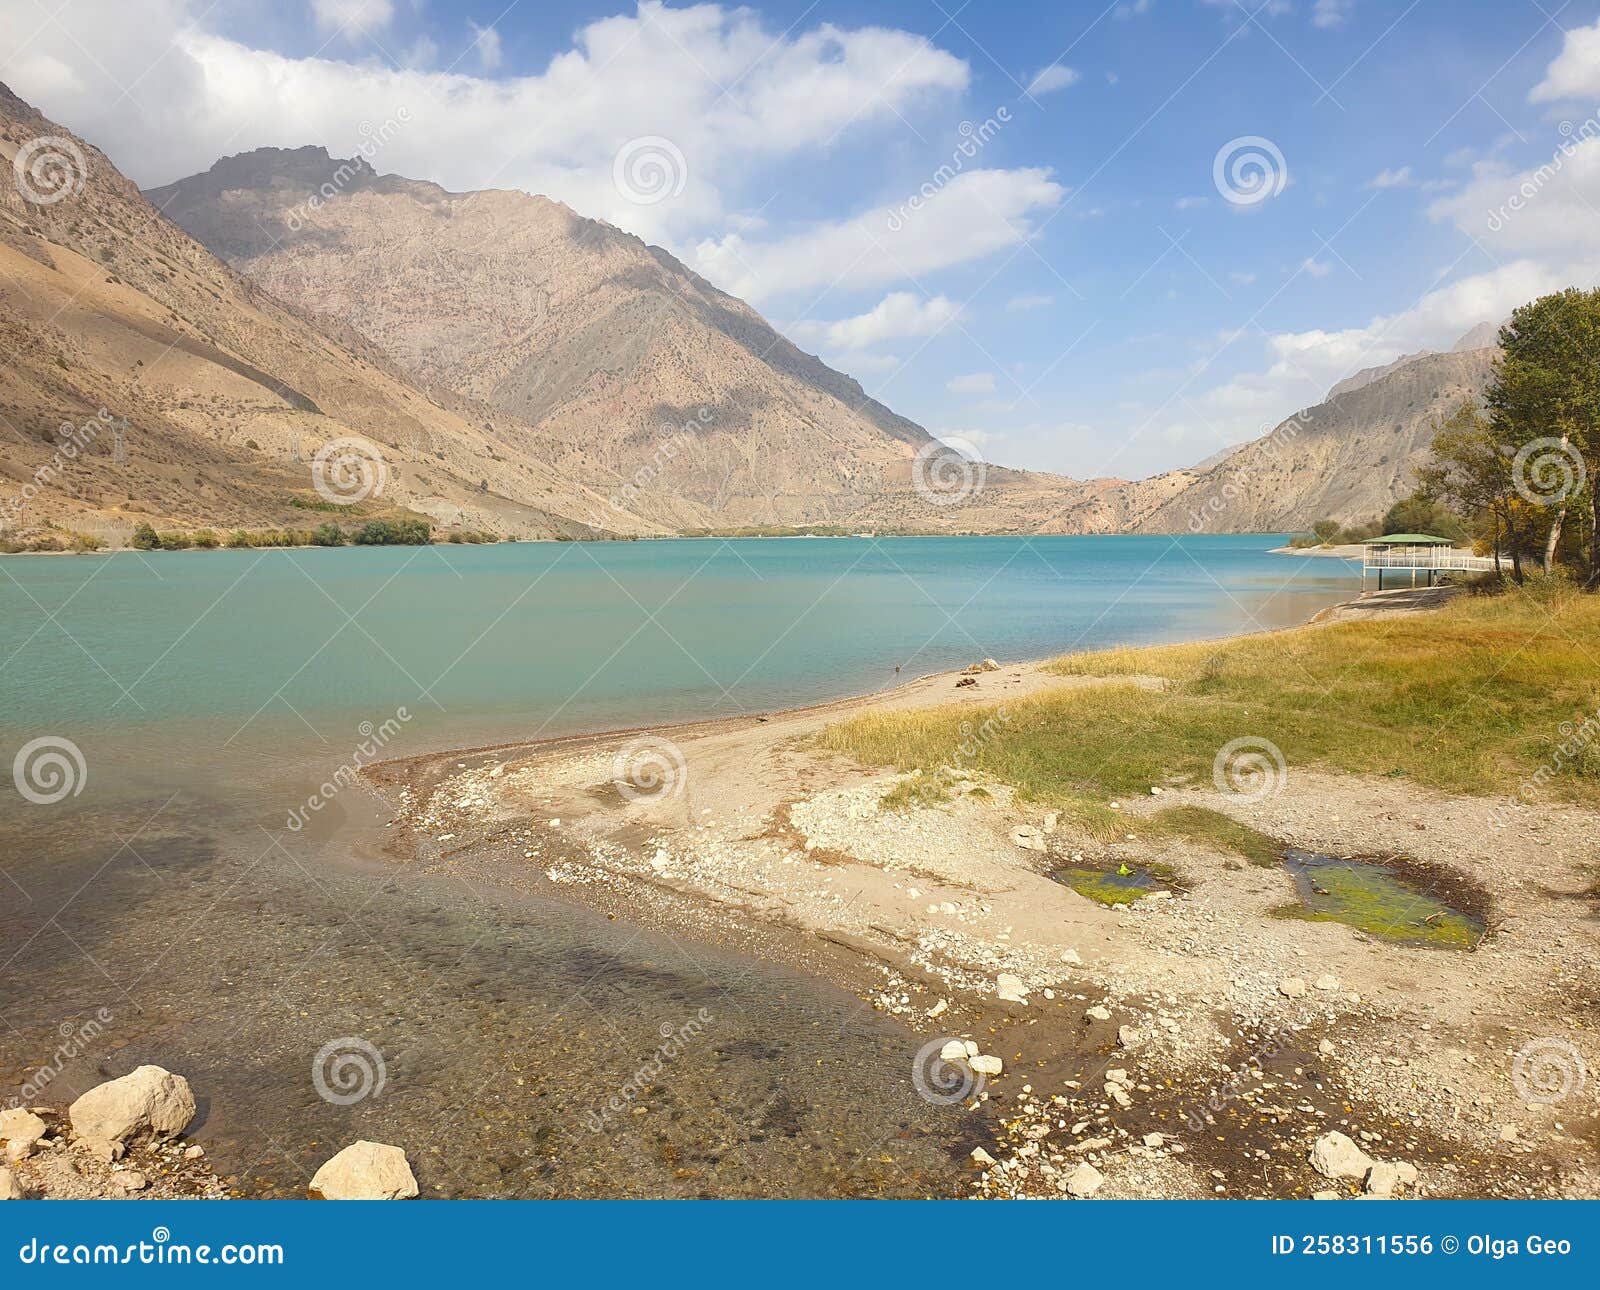 mountain lake iskanderkul tajikistan